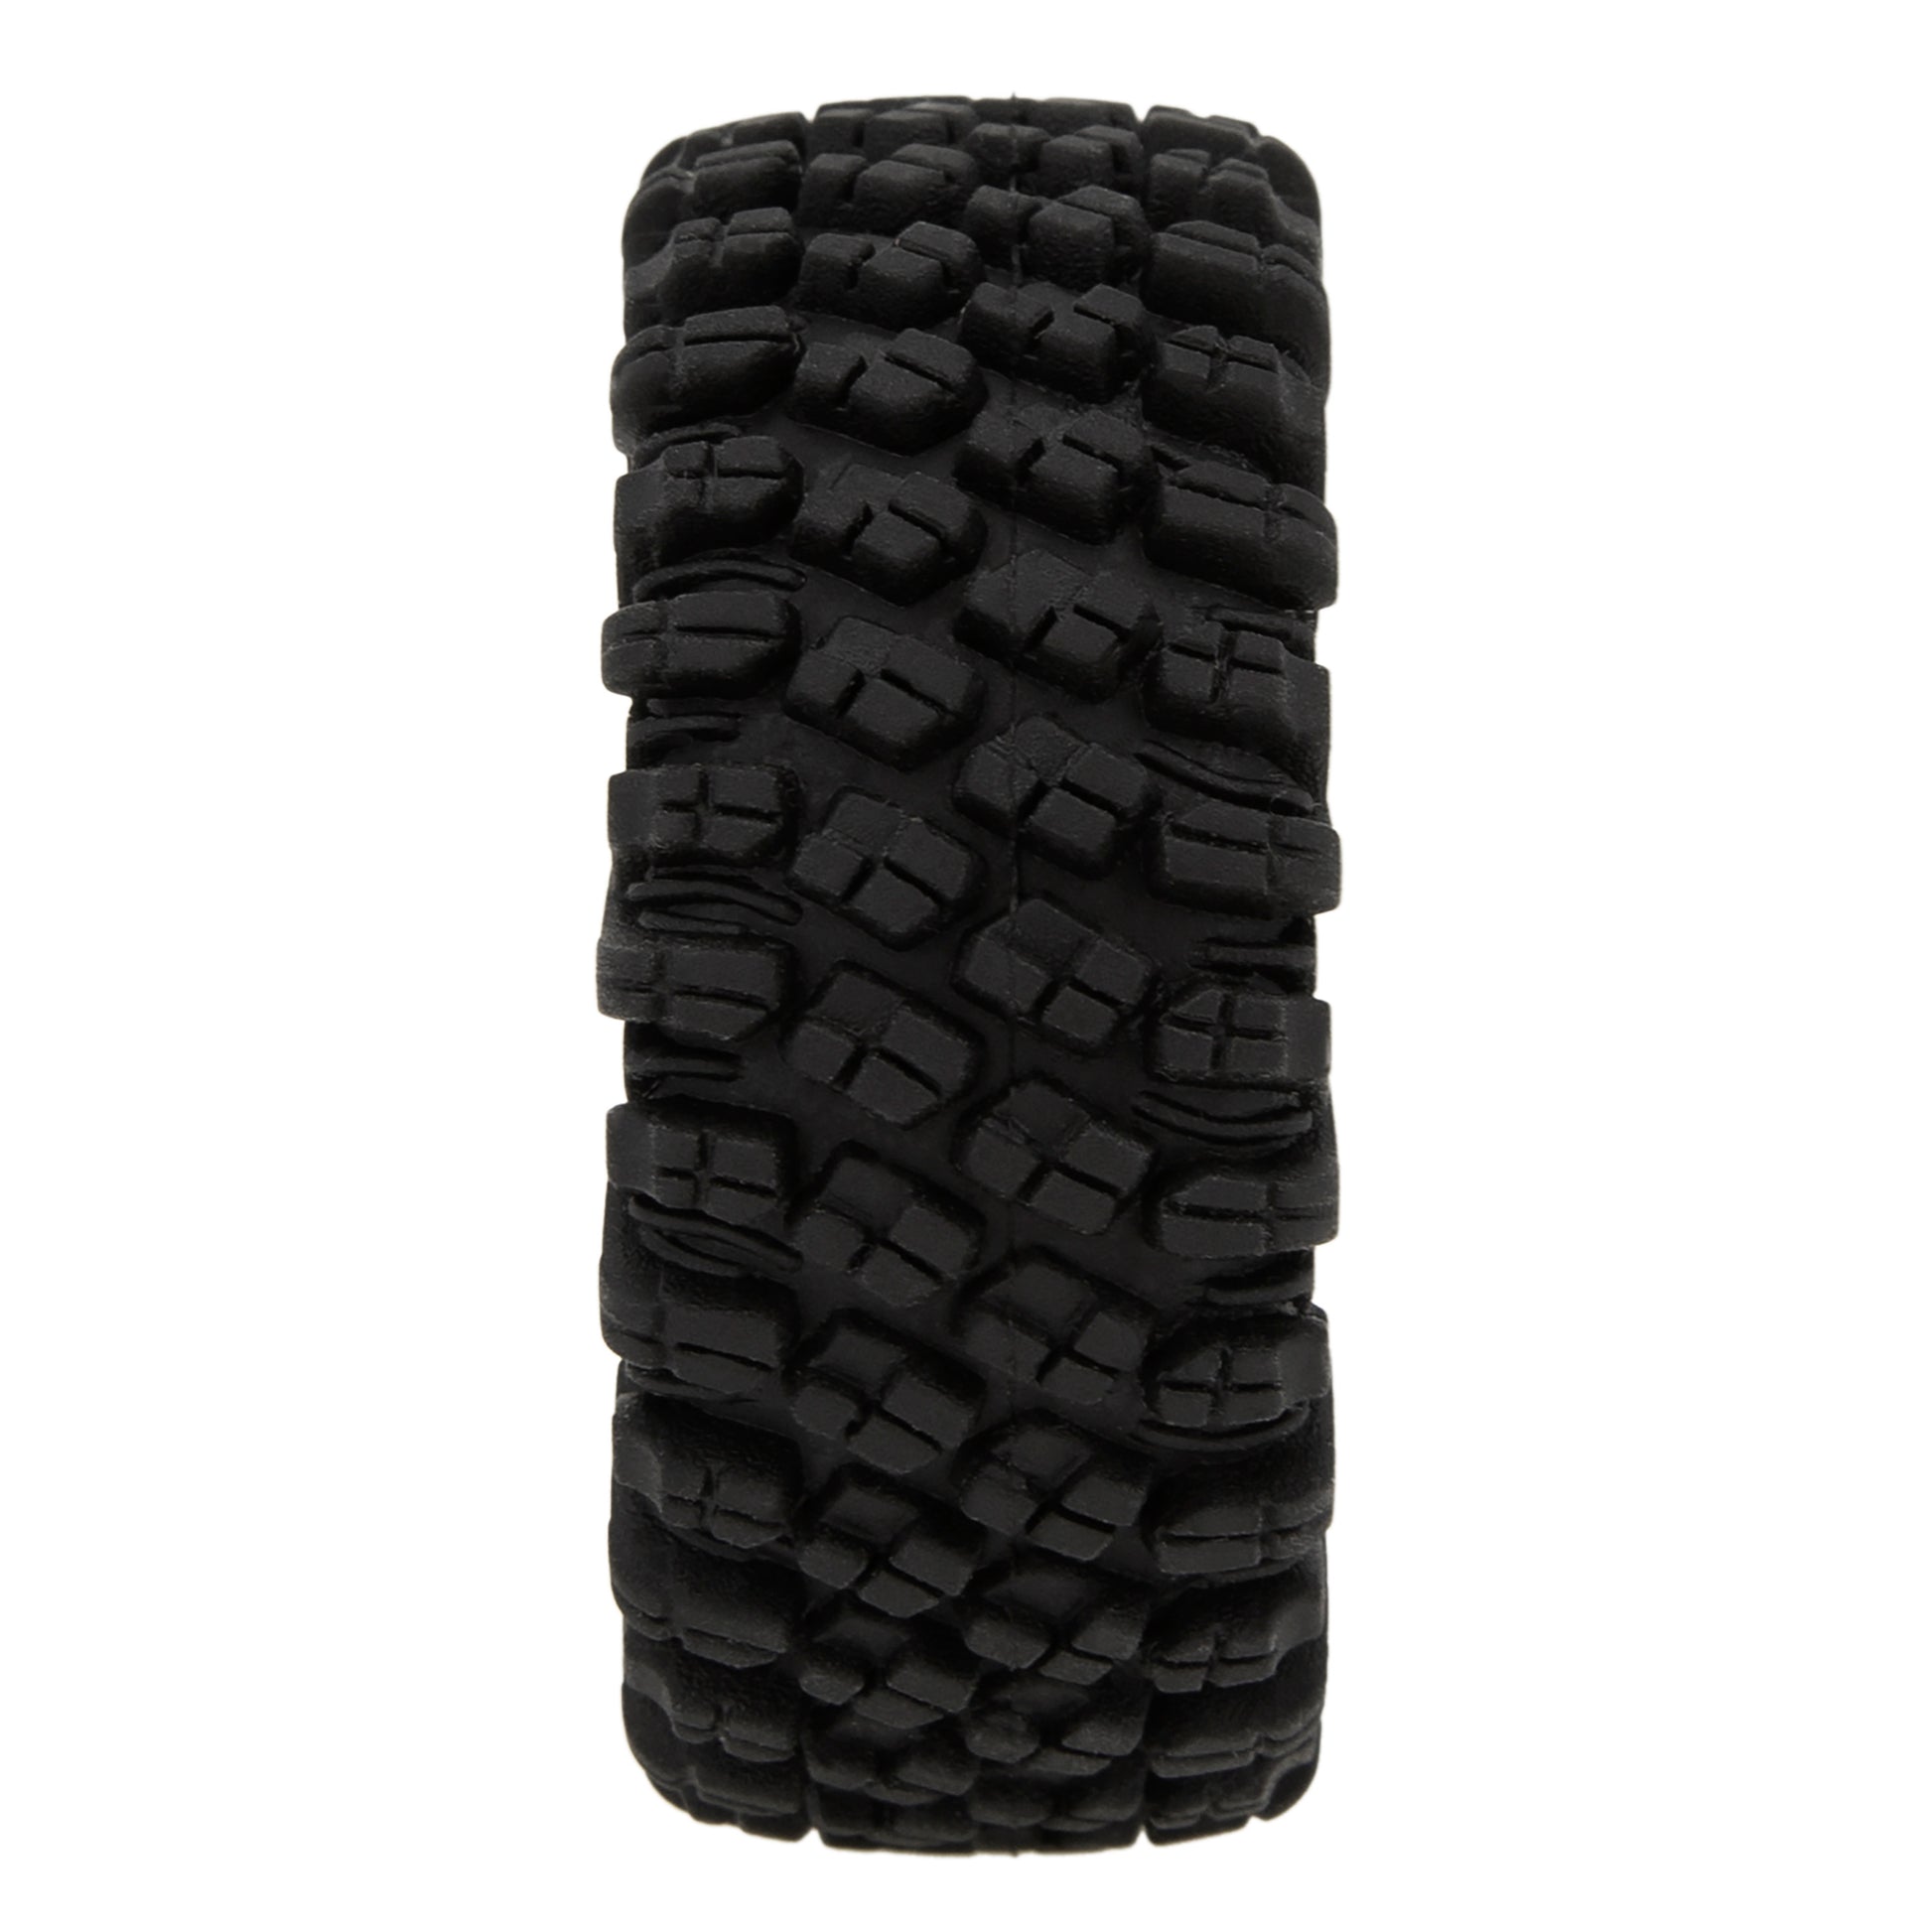 C type 1.2-inch Beadlock Tires for SCX24, TRX4M, FCX24